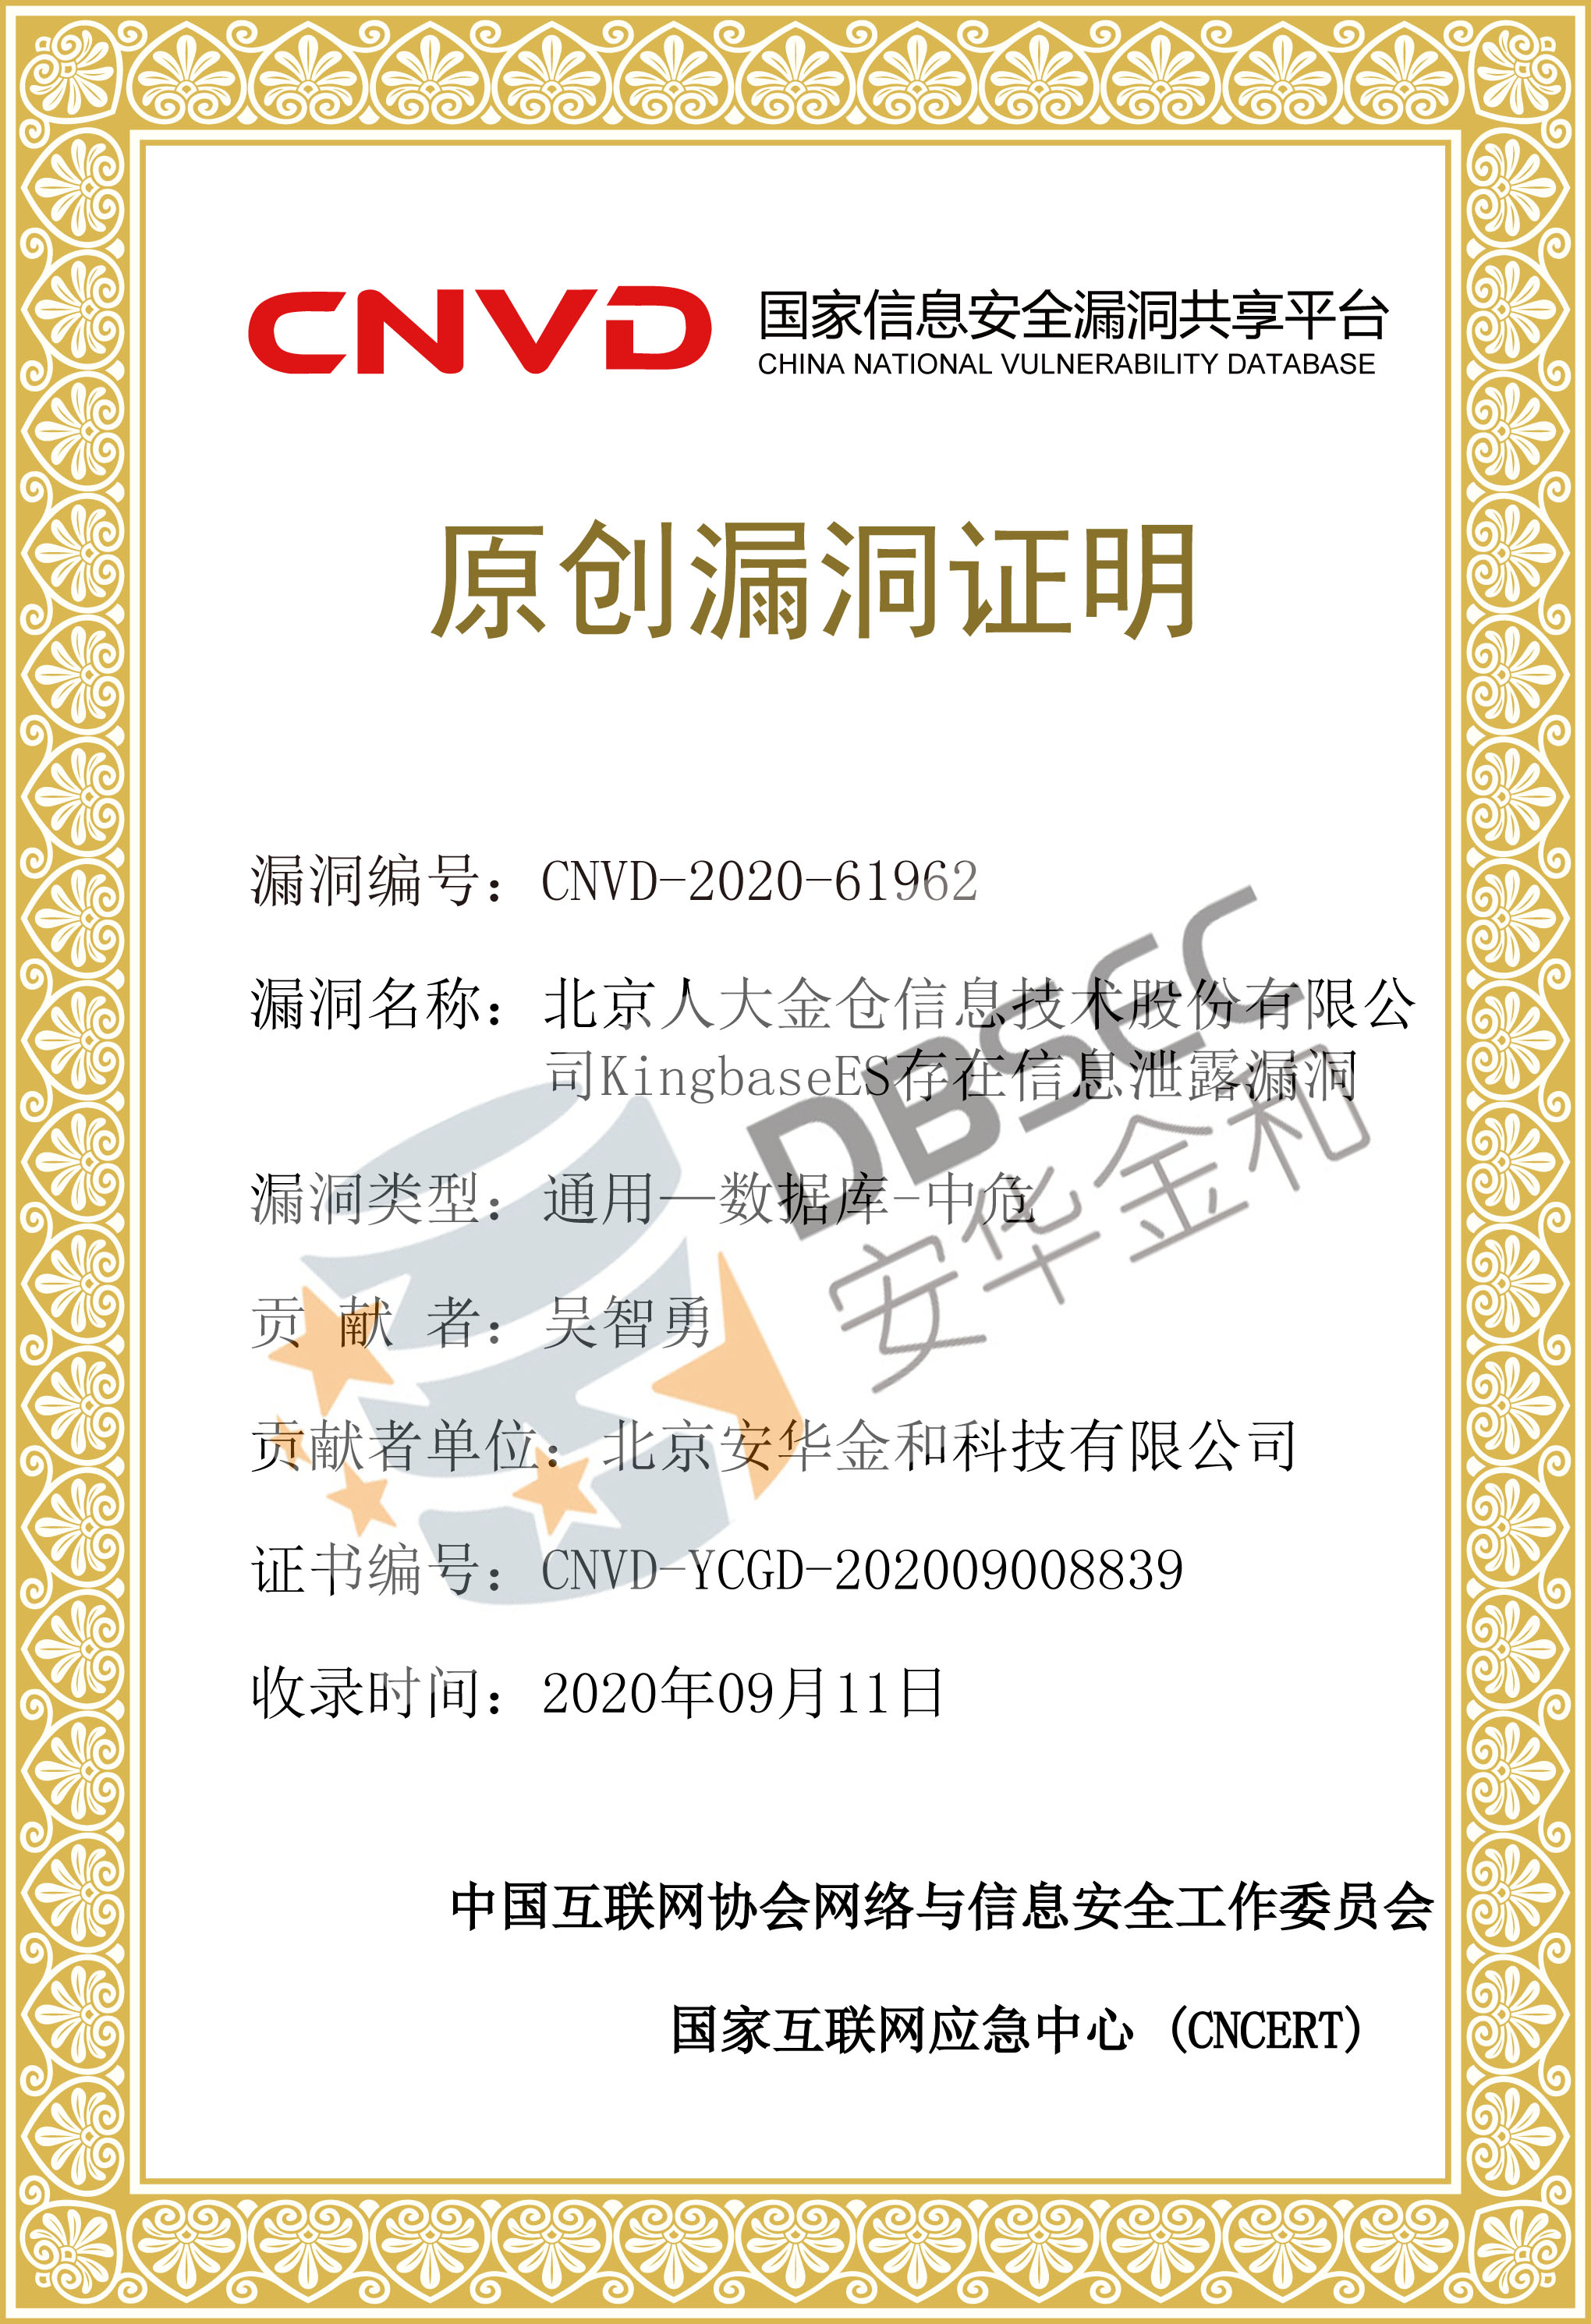 CNVD-YCGD-202009008839